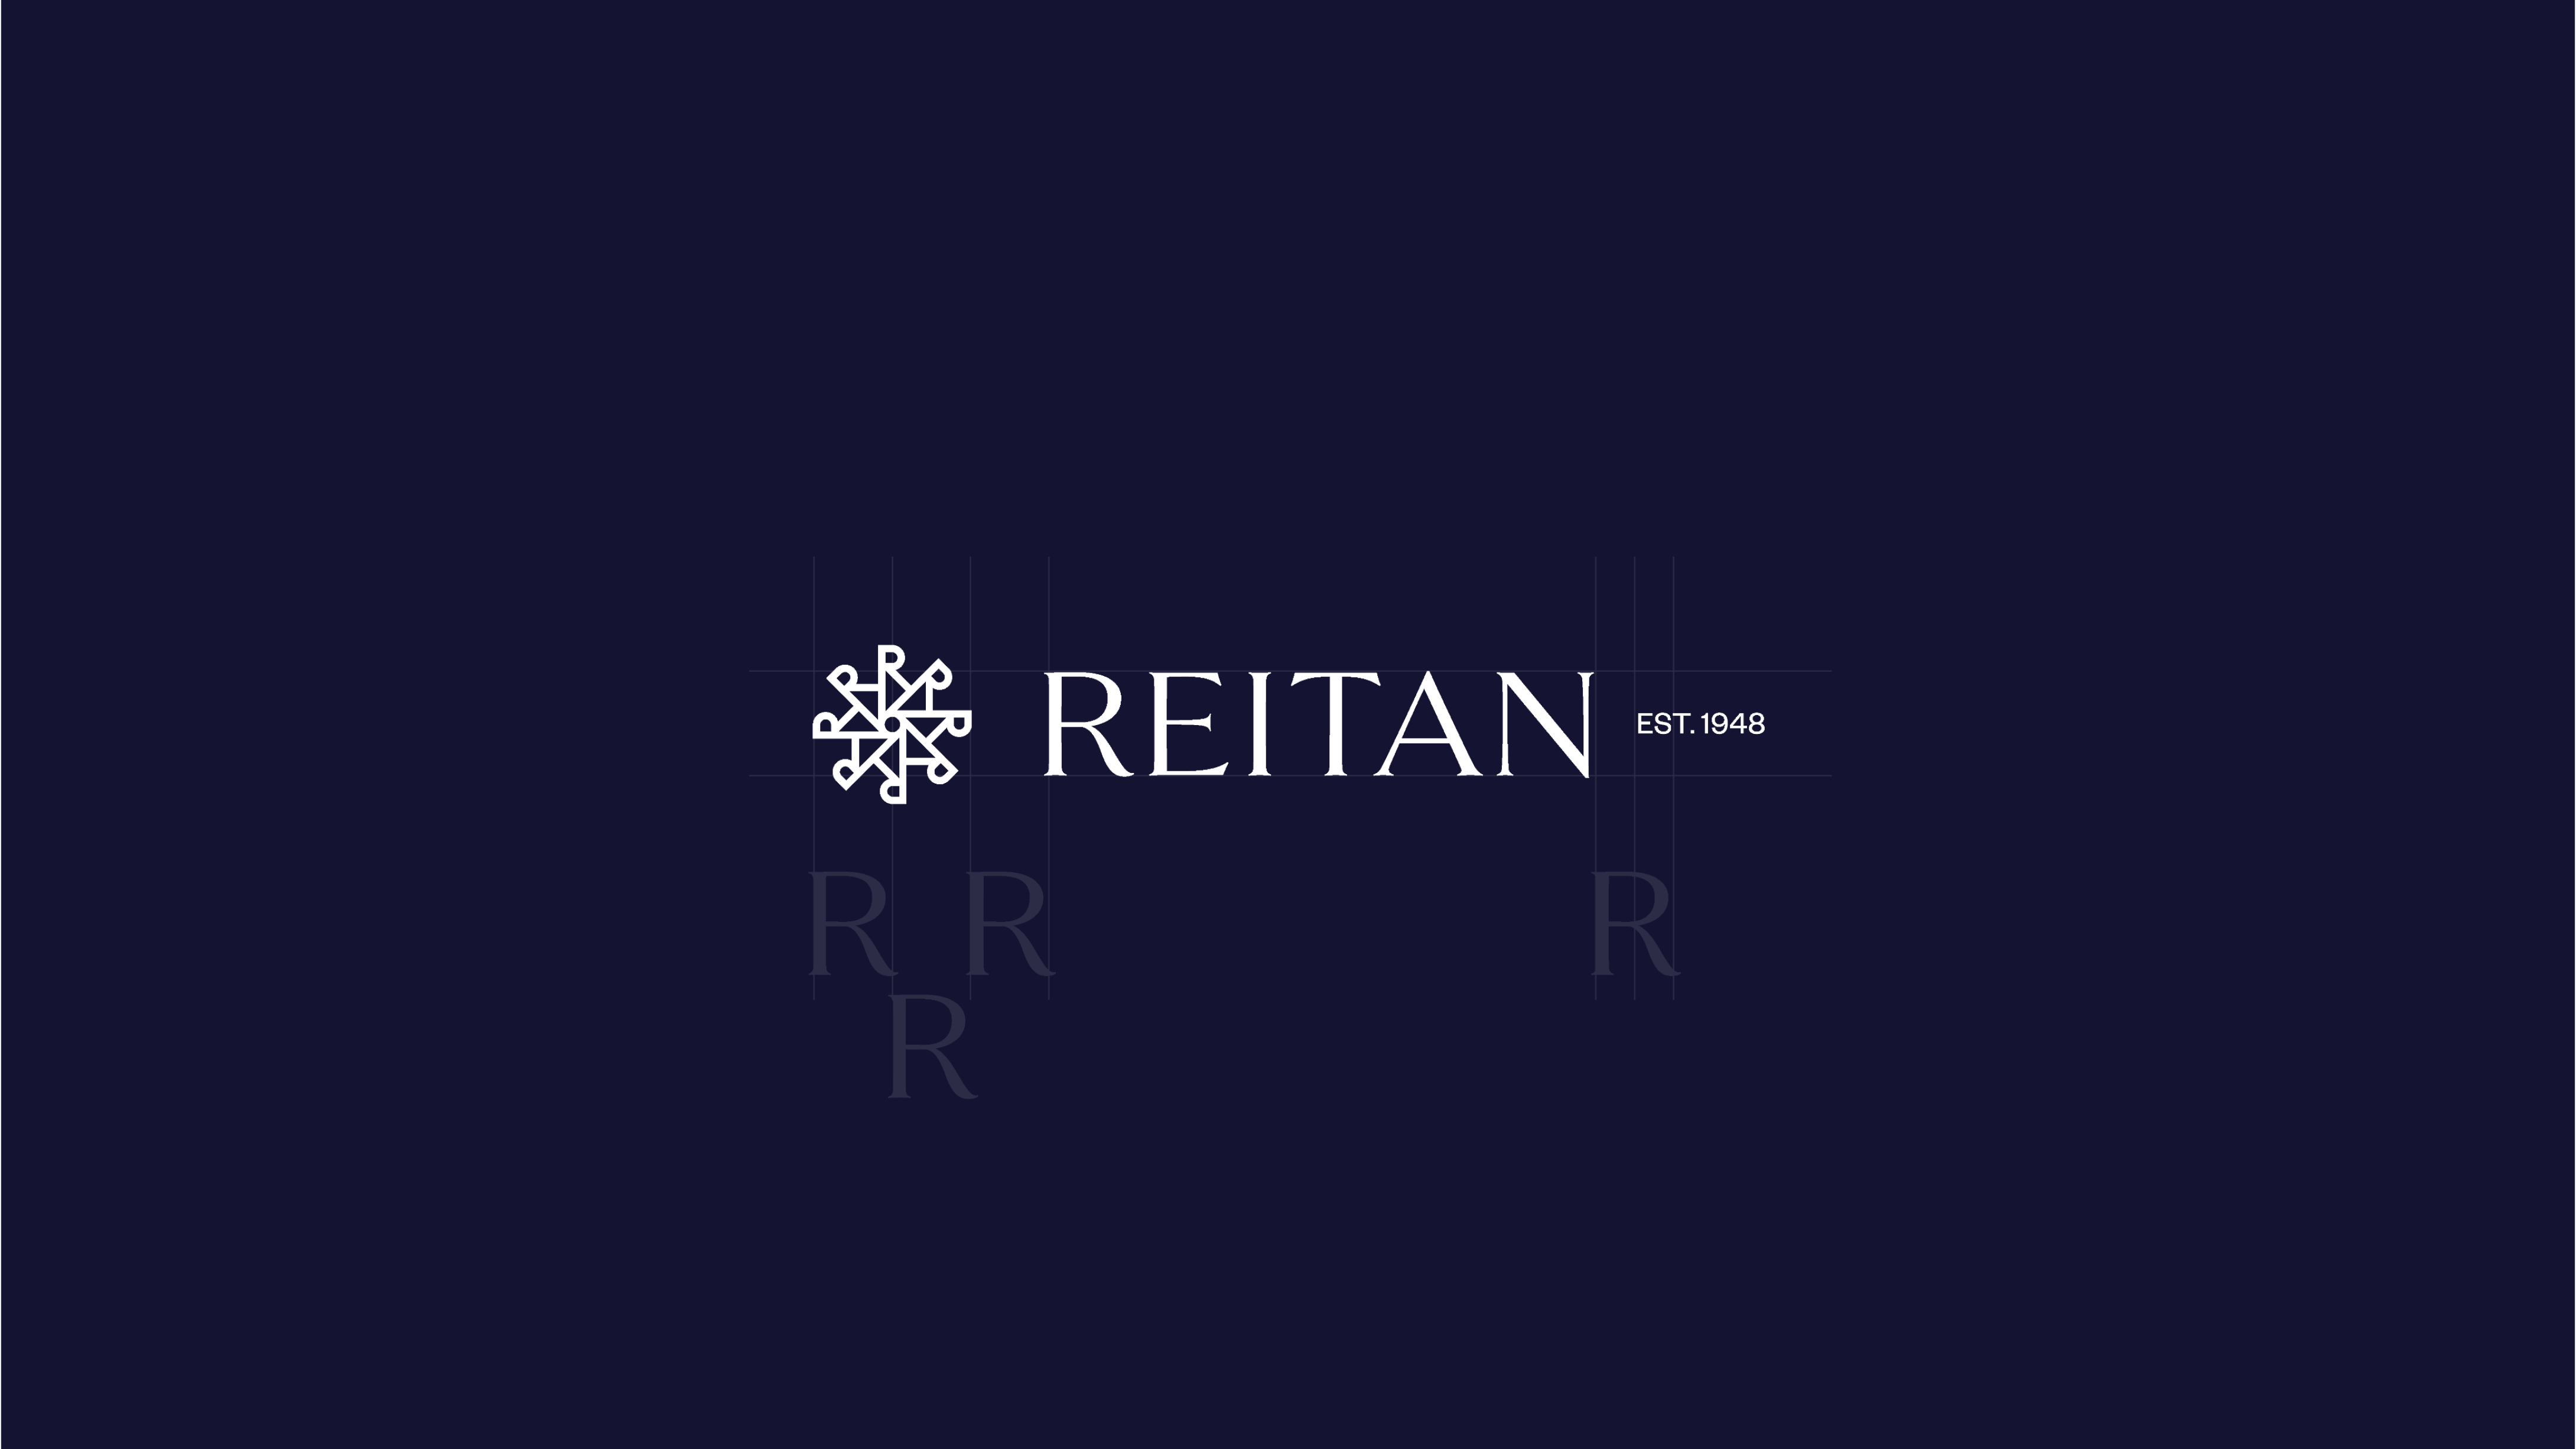 Reitan structure of secondary logo